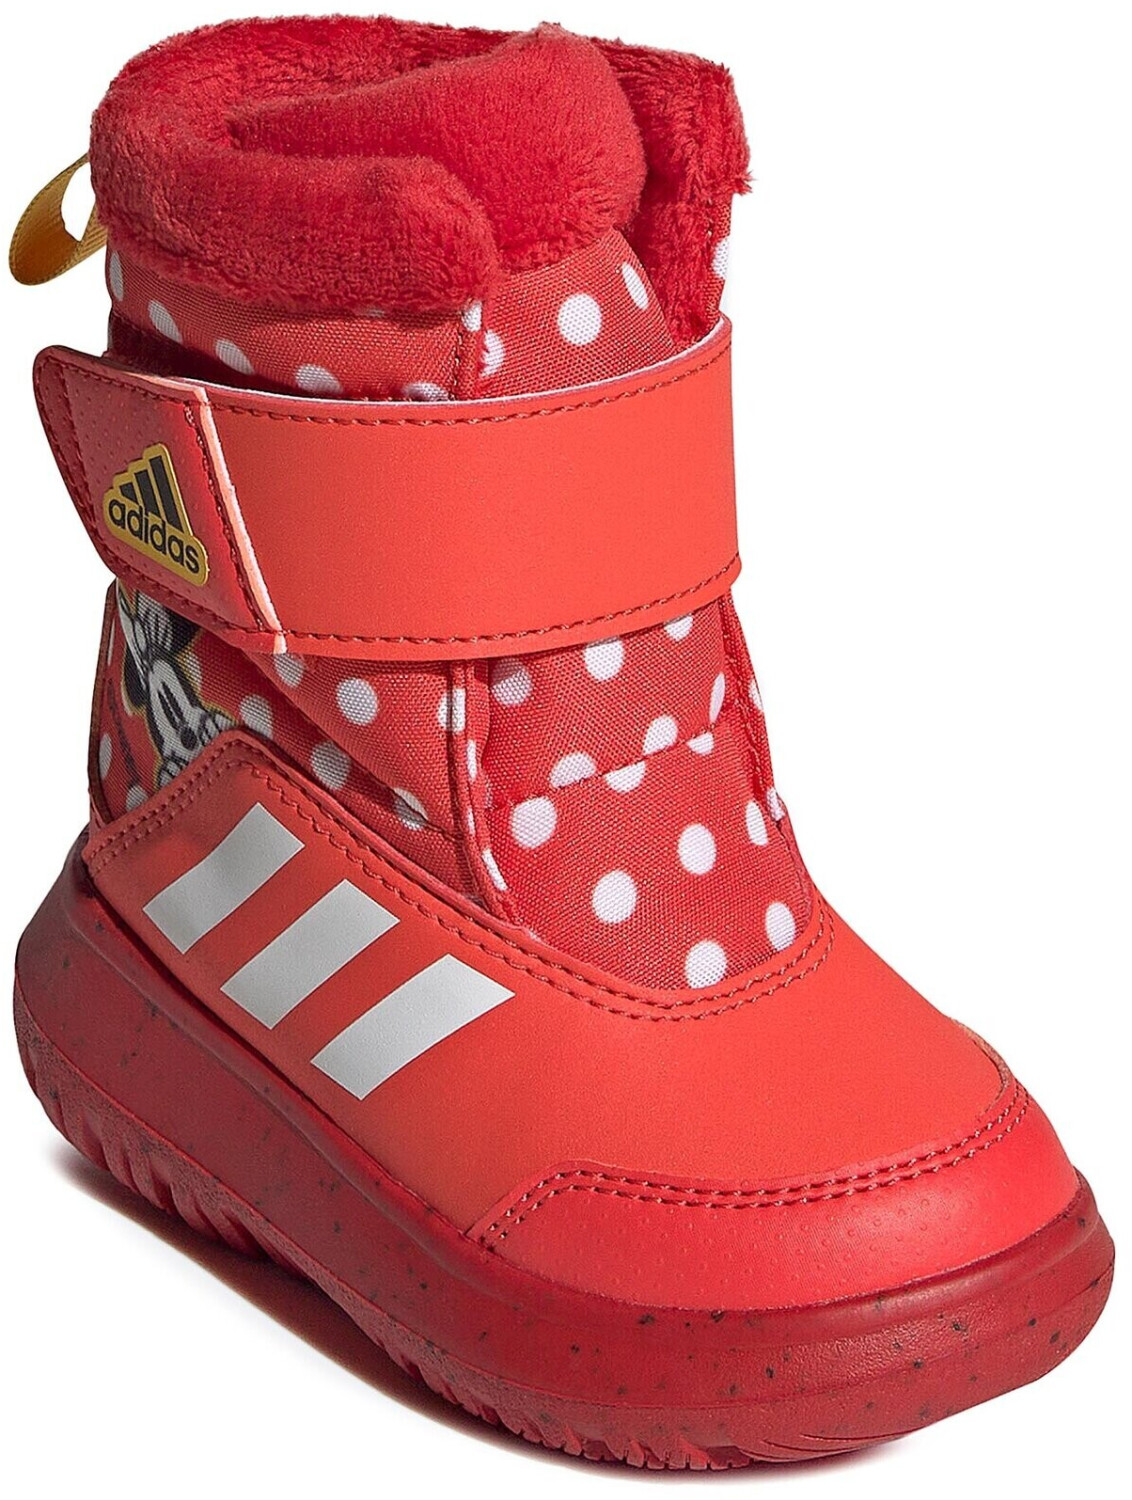 Adidas Winterplay Disney bei scarlet (Kids) ab X white/better € Preisvergleich 21,90 red/cloud | bright